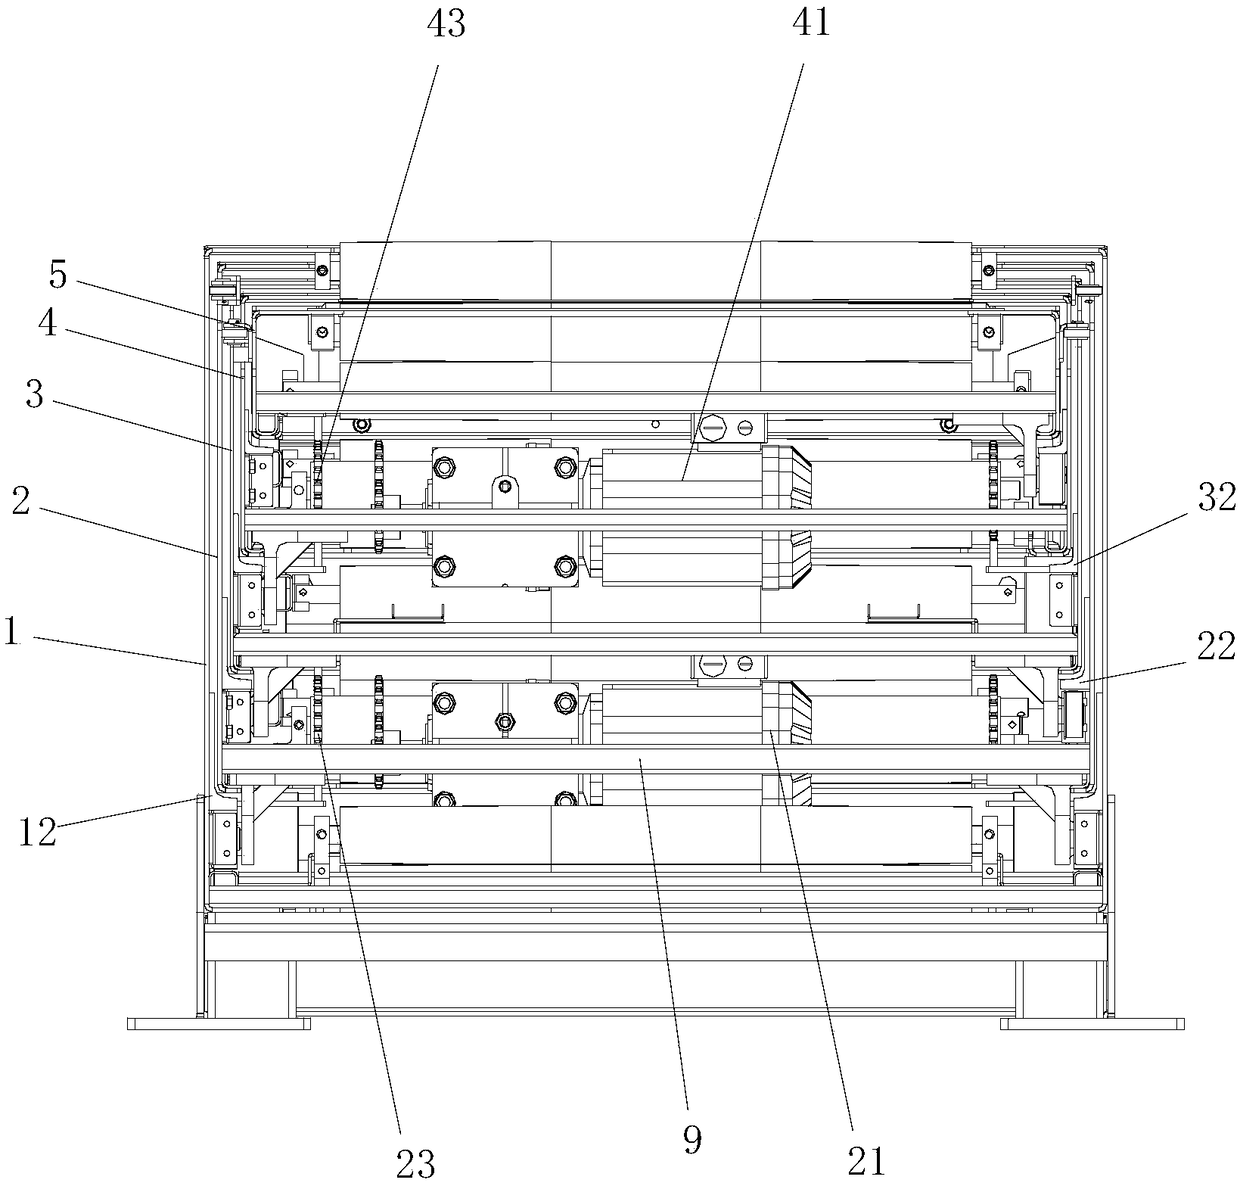 Five-section telescopic conveyer